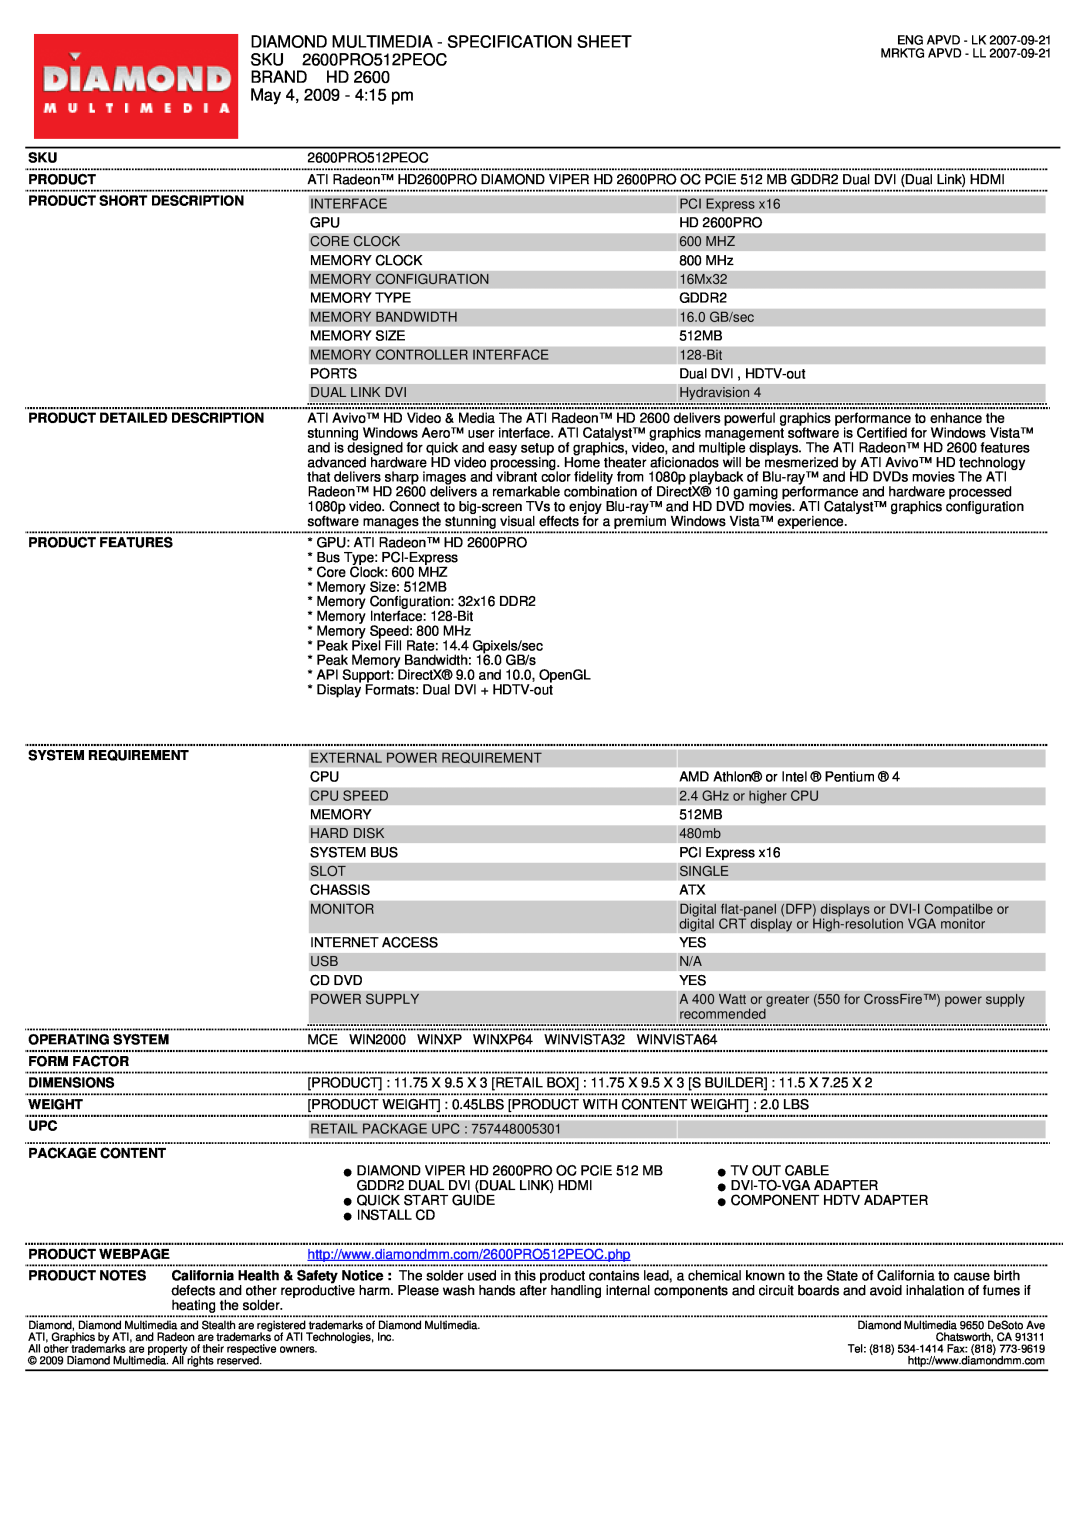 Diamond Multimedia 2600PRO512PEOC specifications Diamond Multimedia - Specification Sheet, Brand Hd, May 4, 2009 - 415 pm 